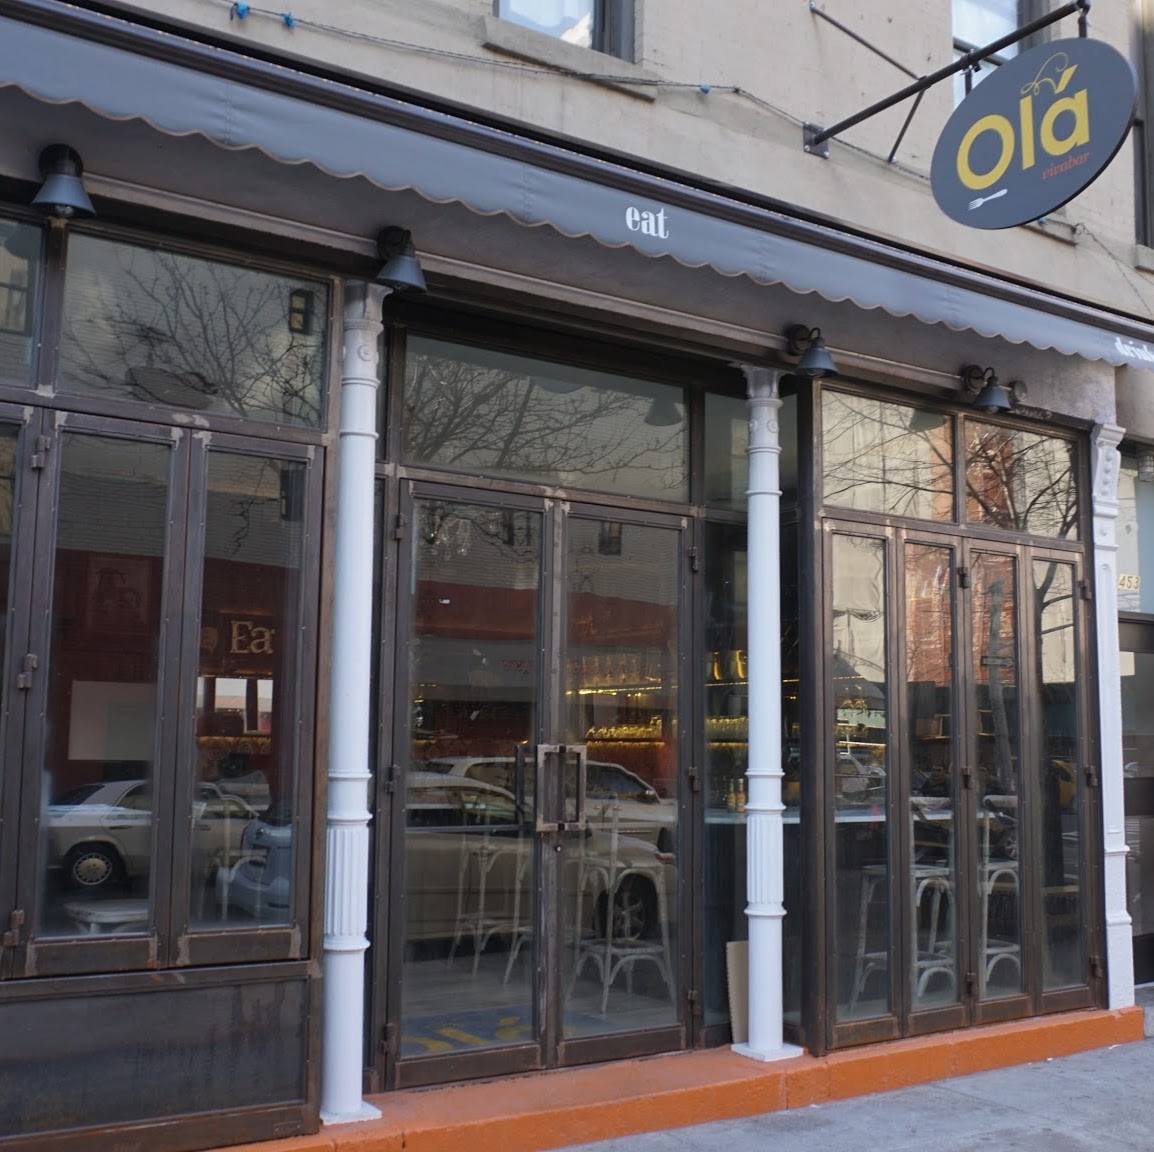 Photo of Ola vivabar in New York City, New York, United States - 1 Picture of Restaurant, Food, Point of interest, Establishment, Bar